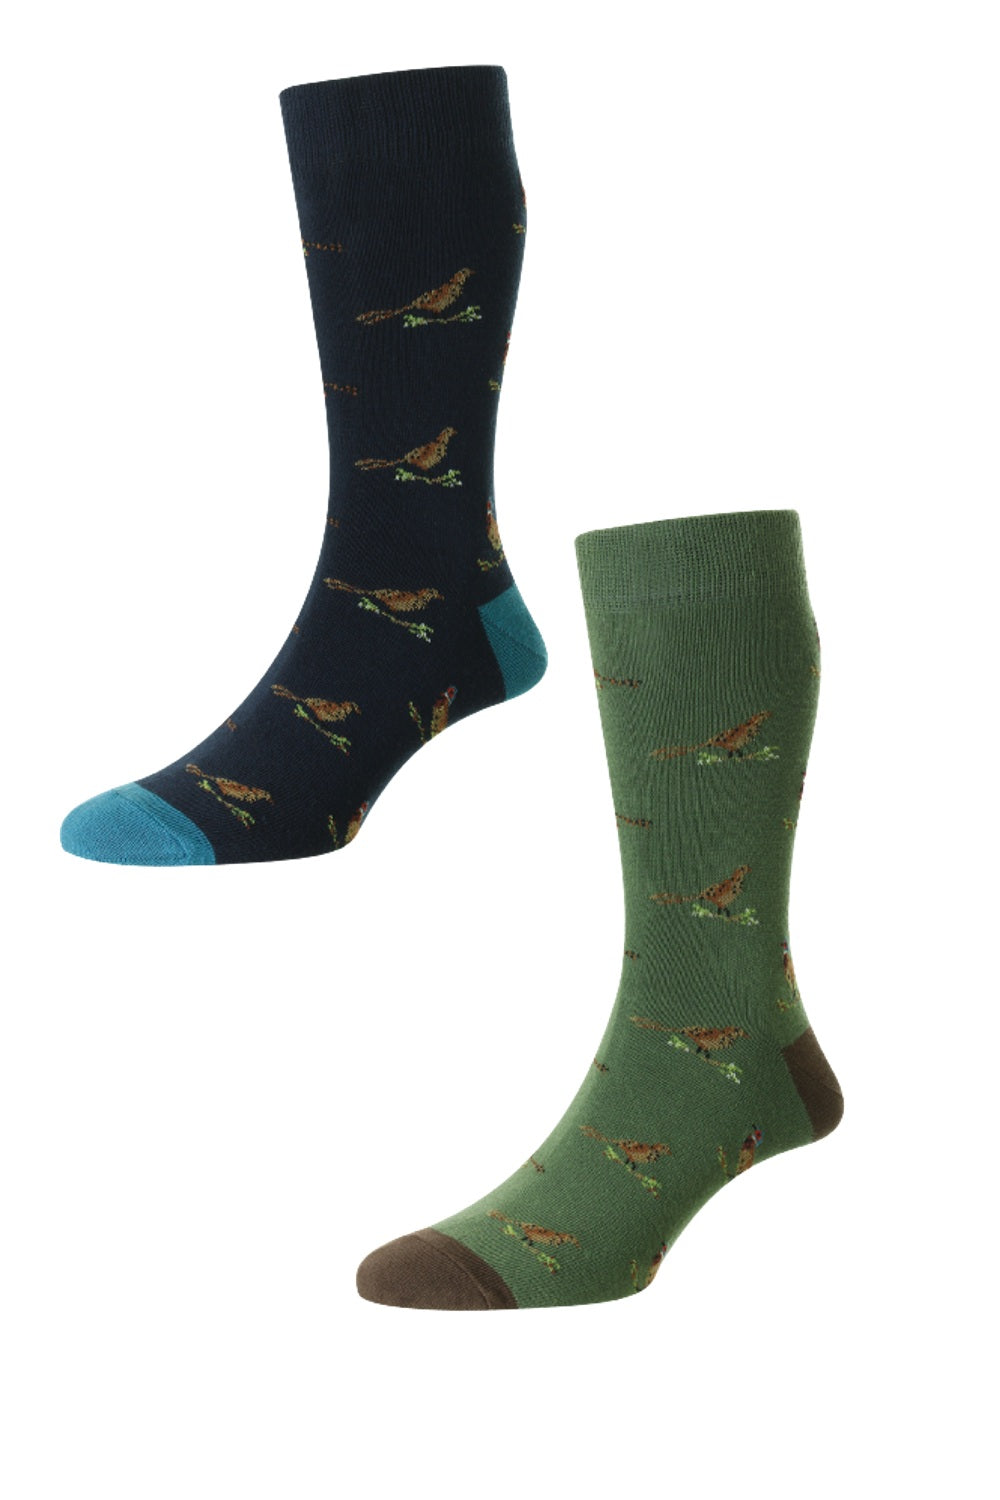 Cotton Rich - Walking Socks - HJ Hall Socks - Official Site